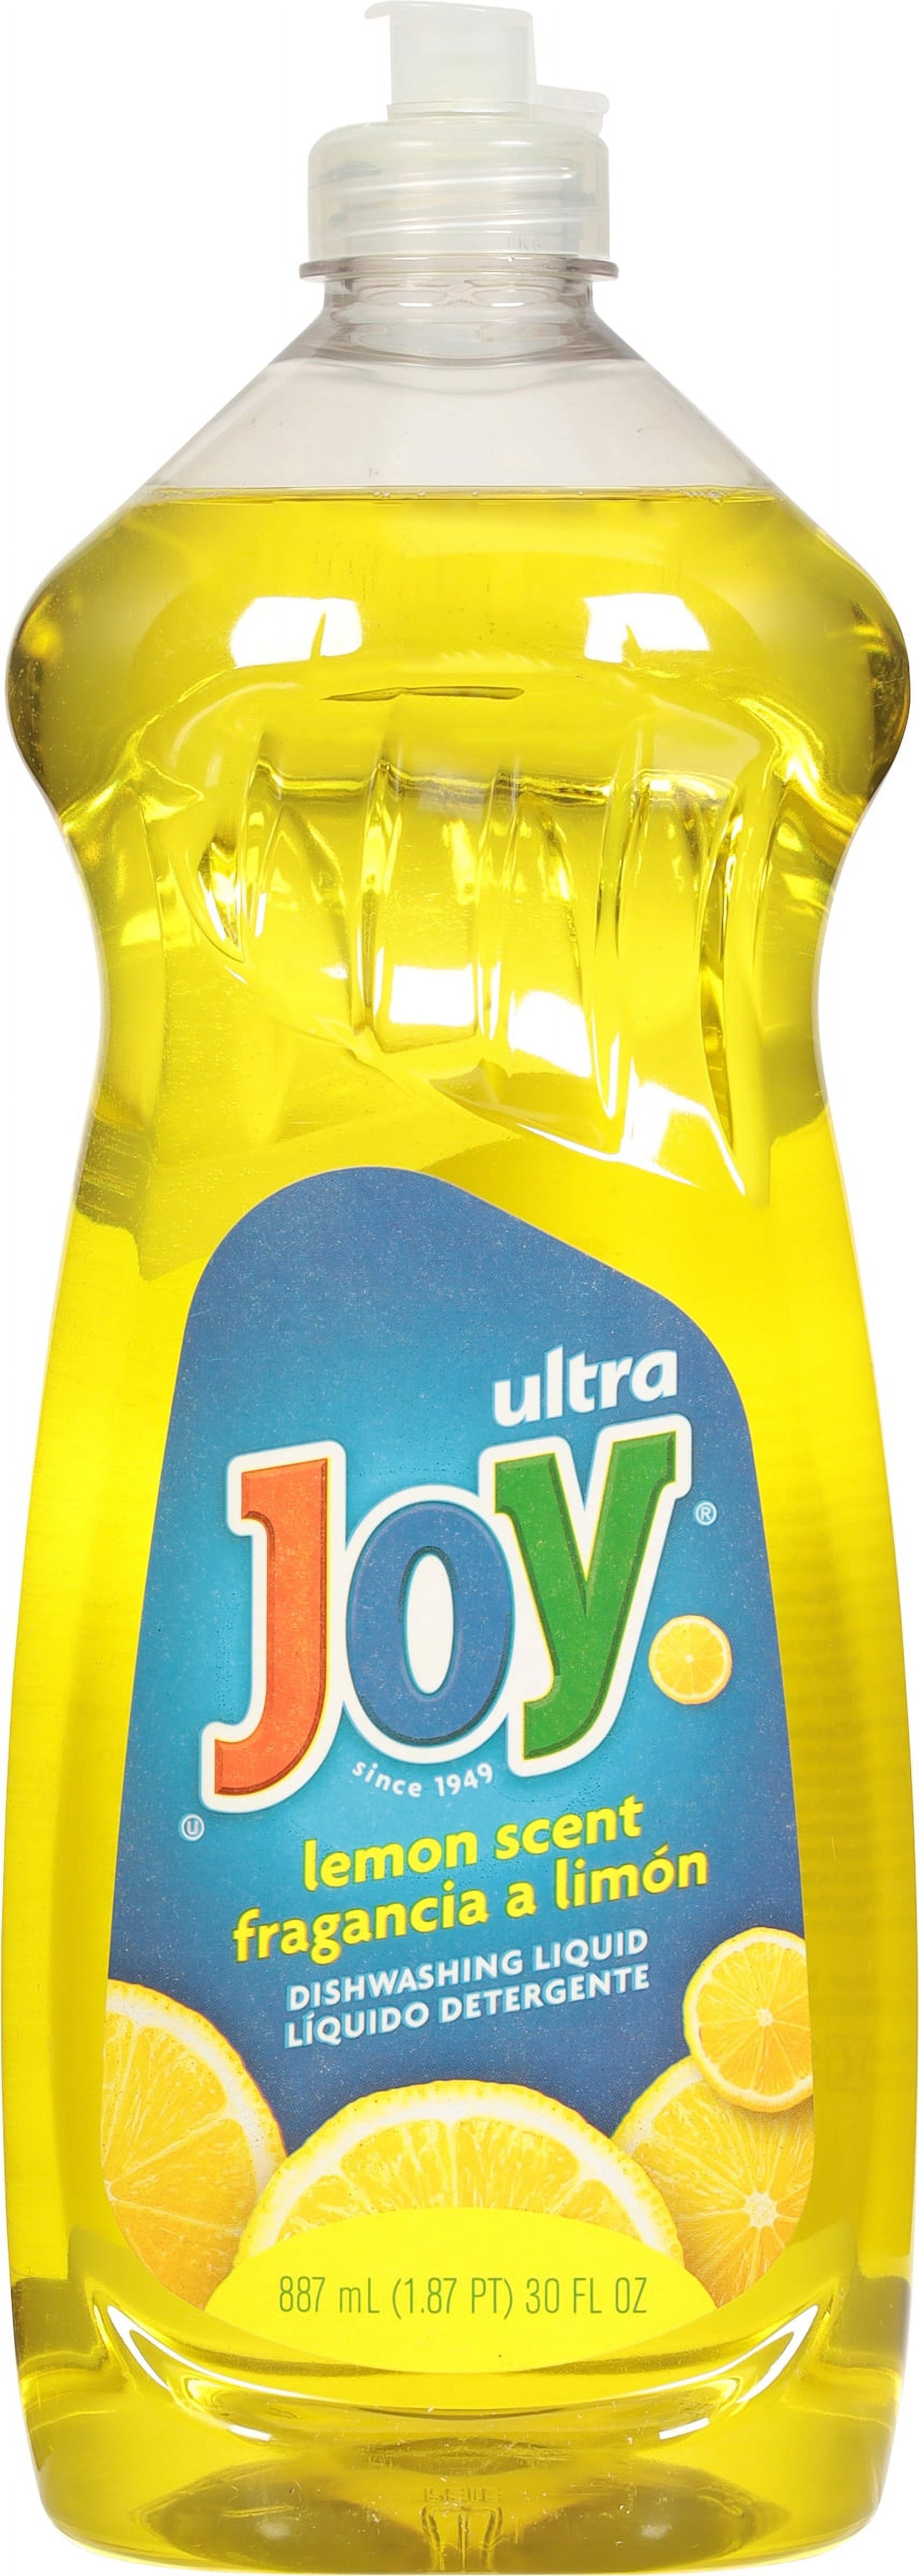 Joy Ultra Liquid Dish Soap, Lemon, 30 fl oz - image 2 of 3